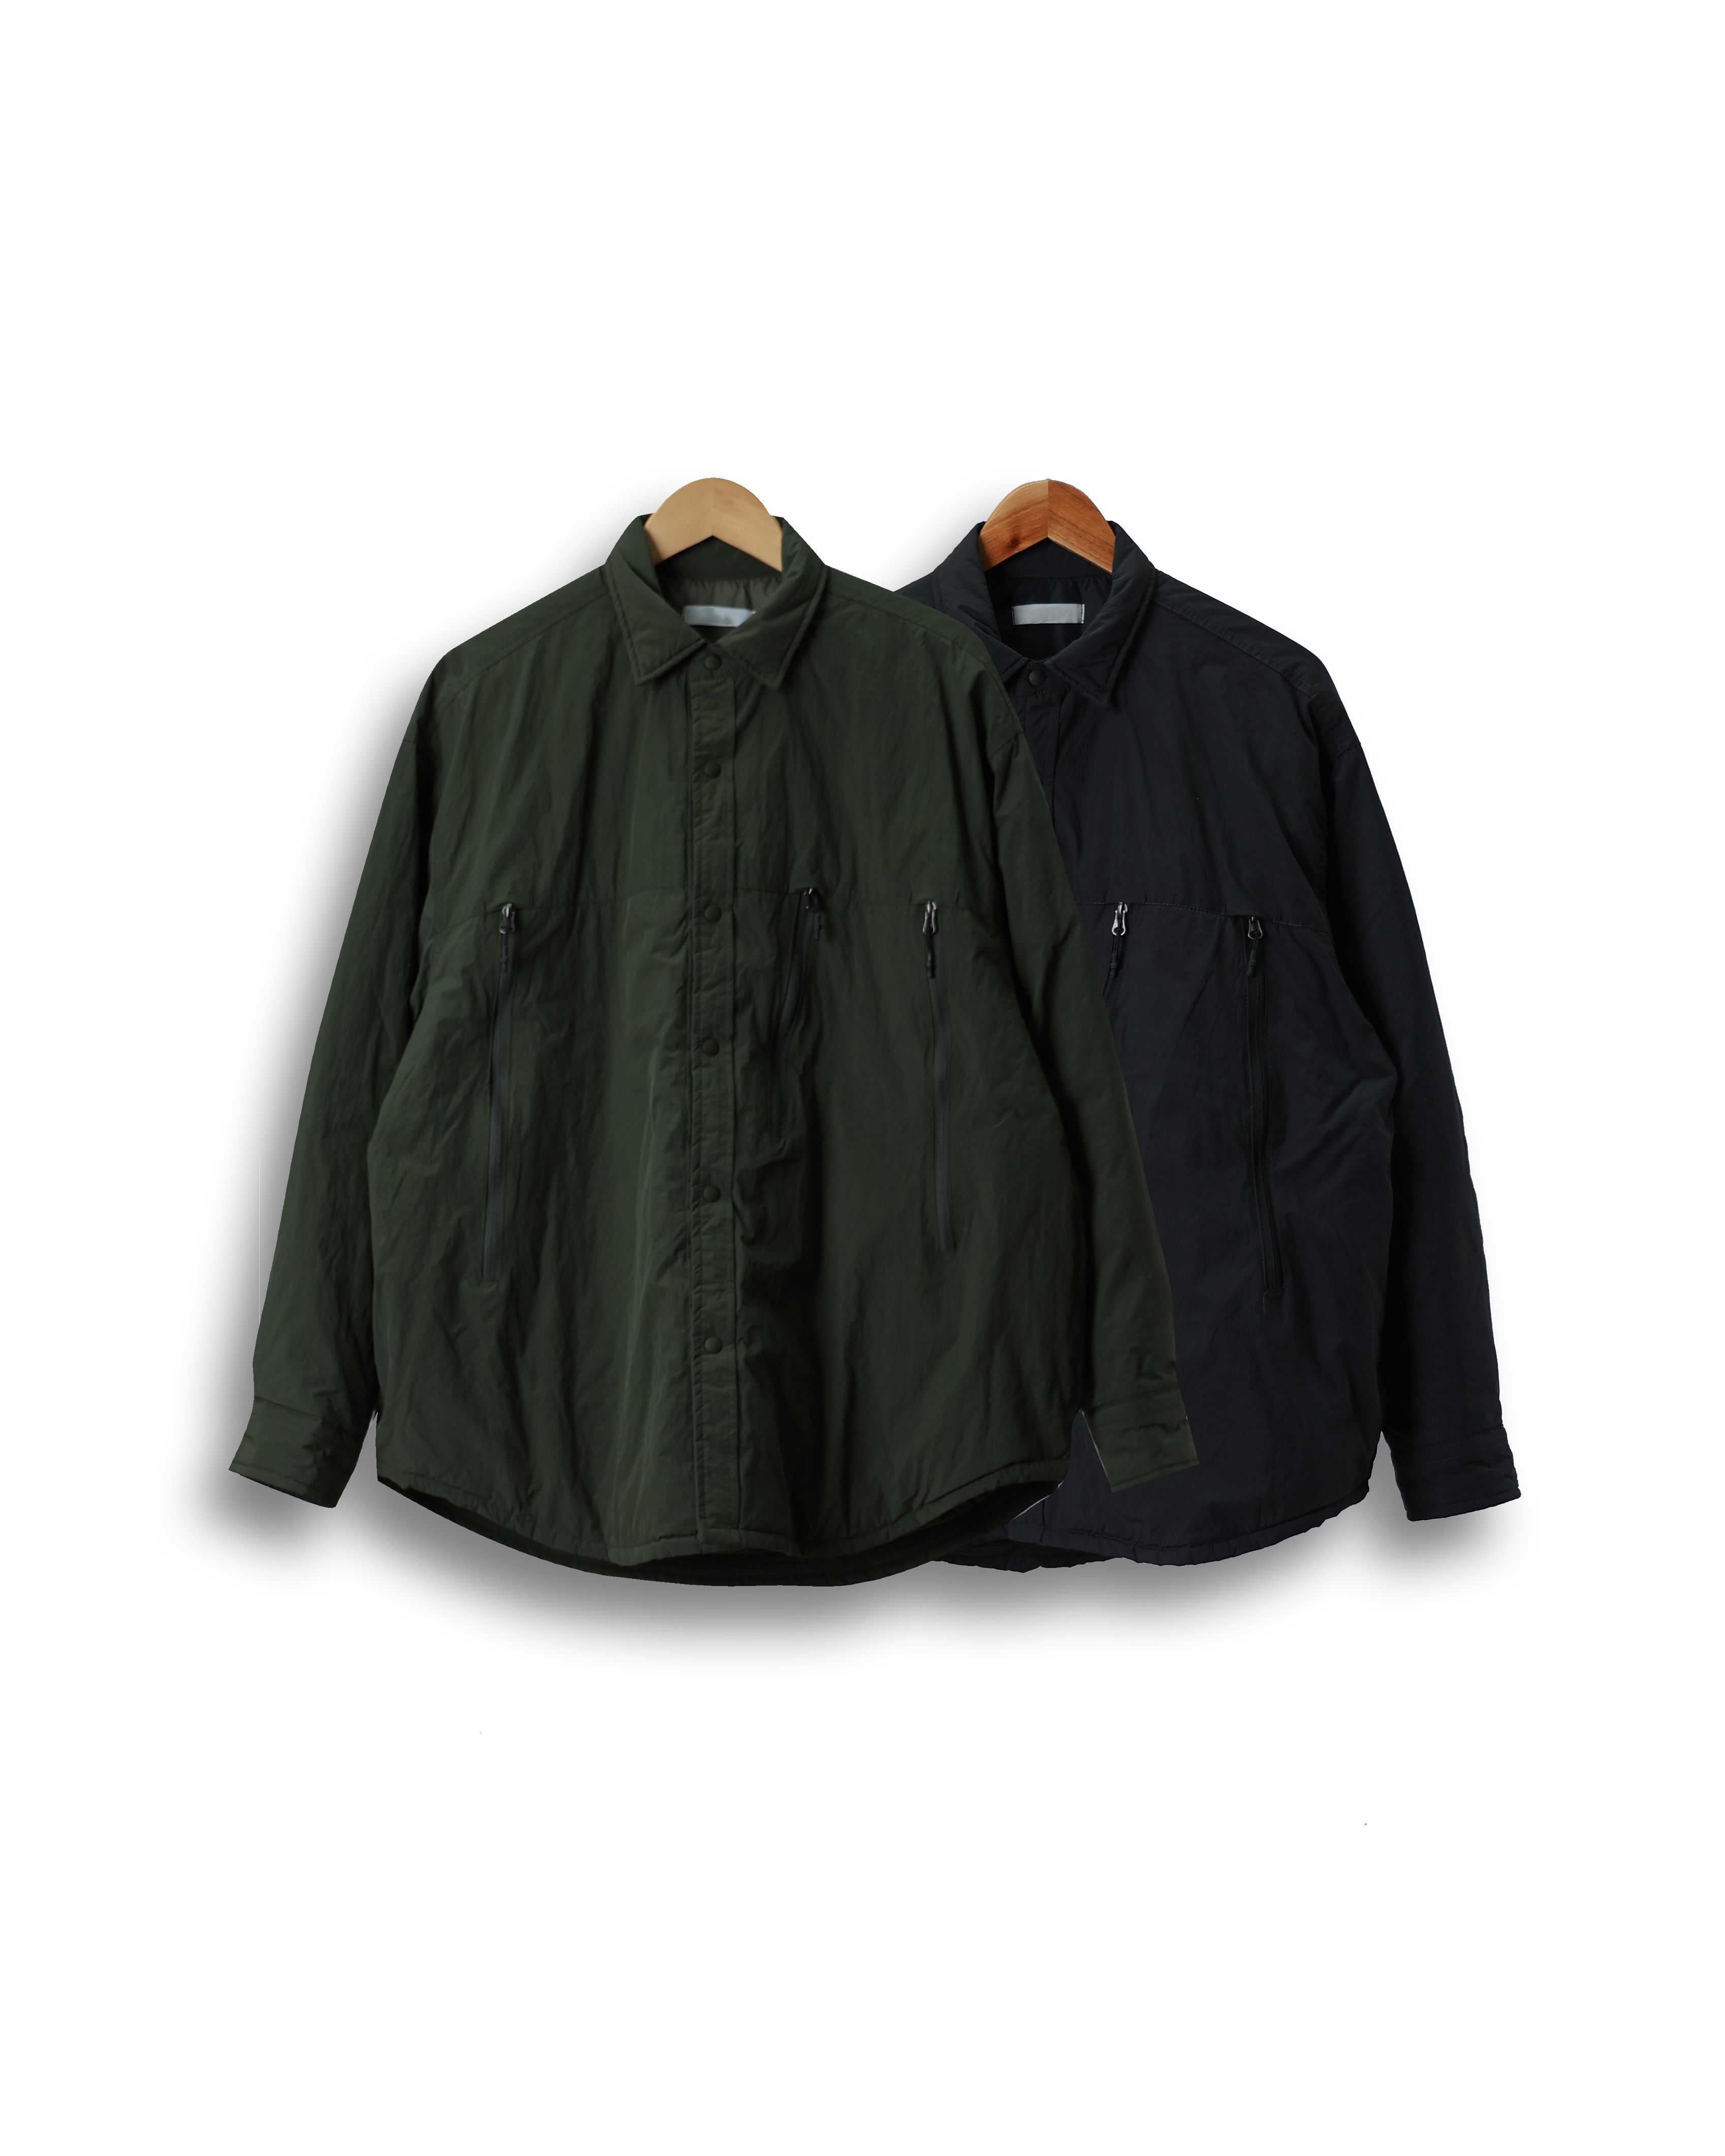 S.PECT SOLID ZIP Padded Shirt Jacket (Black/Olive)